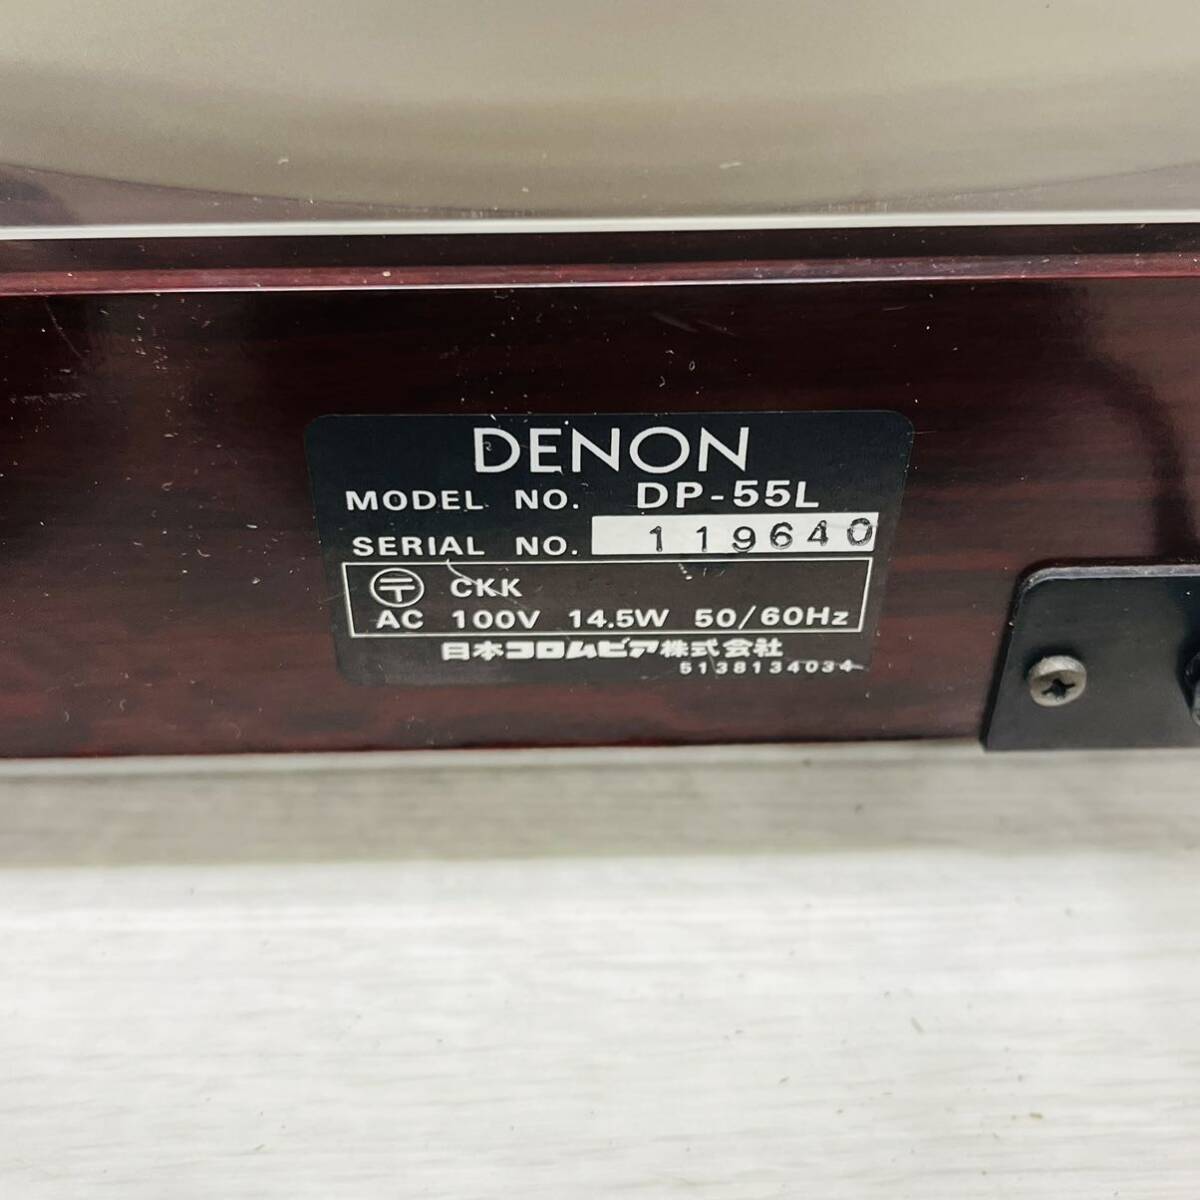 *1 jpy ~* DENON Denon QUARTZ DP-55L quartz lock Direct Drive record player turntable SHURE cartridge M44G